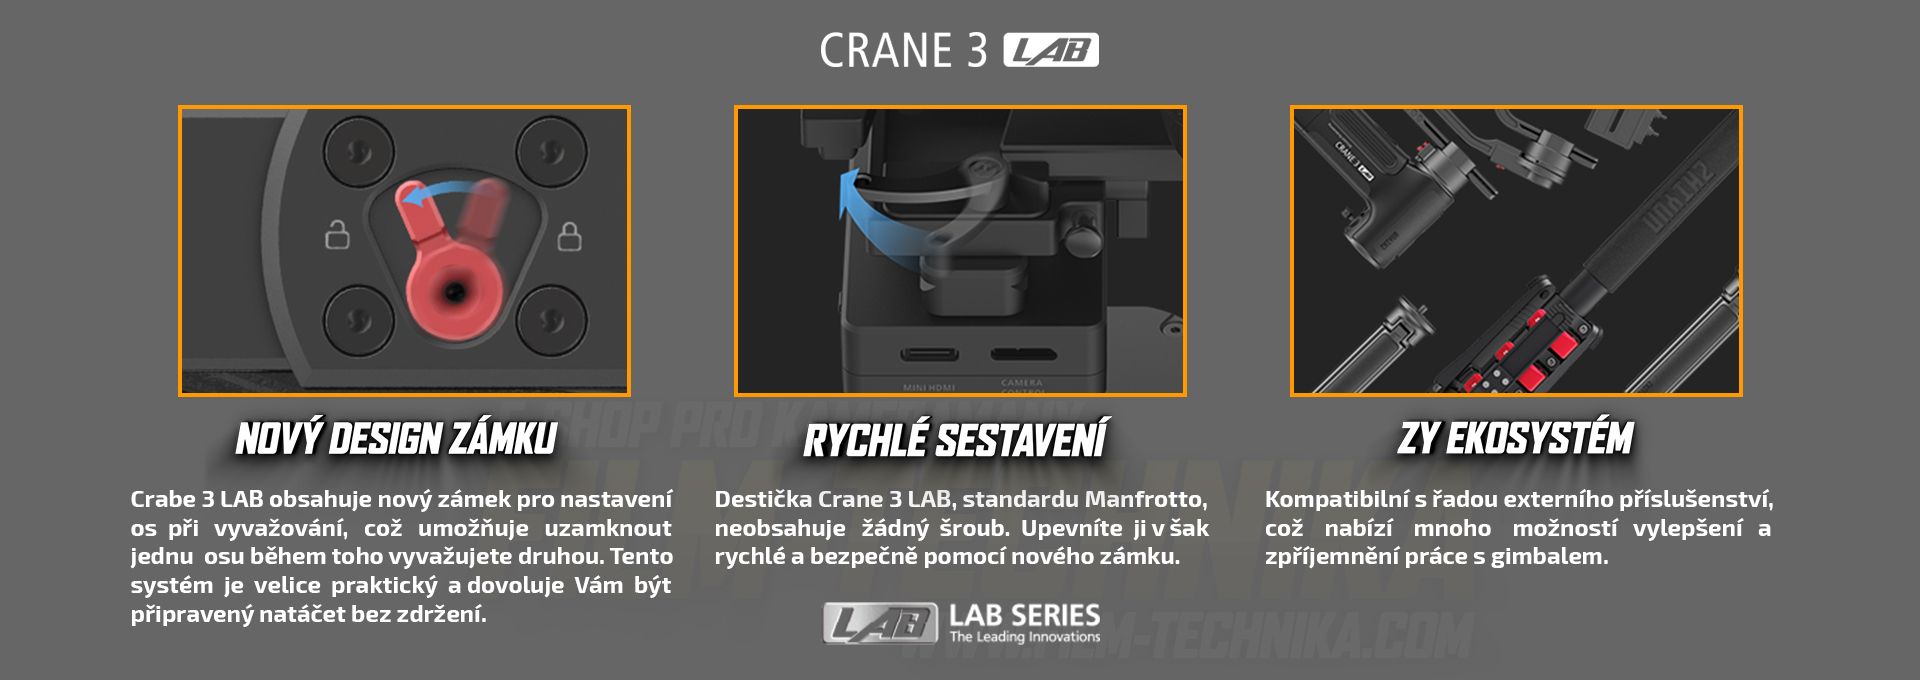 film-technika-zhiyun-crane3-lab-intext16a